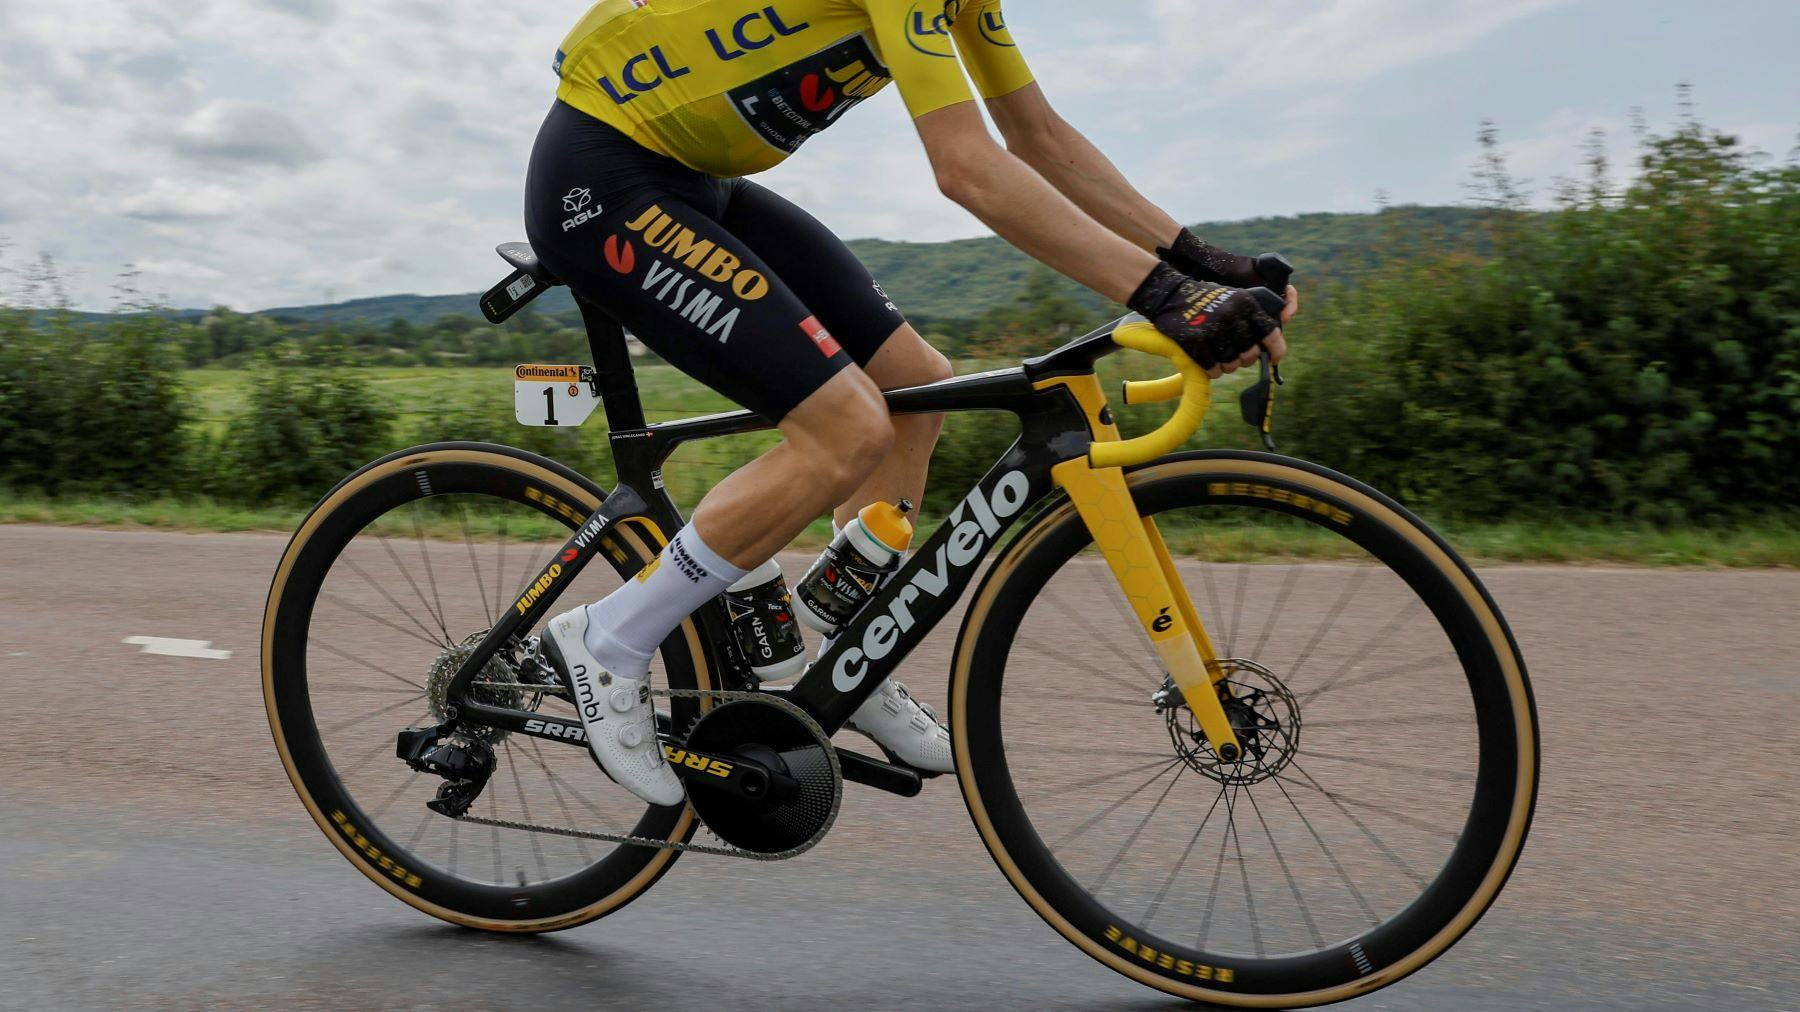 Tour de France winner Jonas Vingegaard wearing Nimbl shoes. – Photo Pon